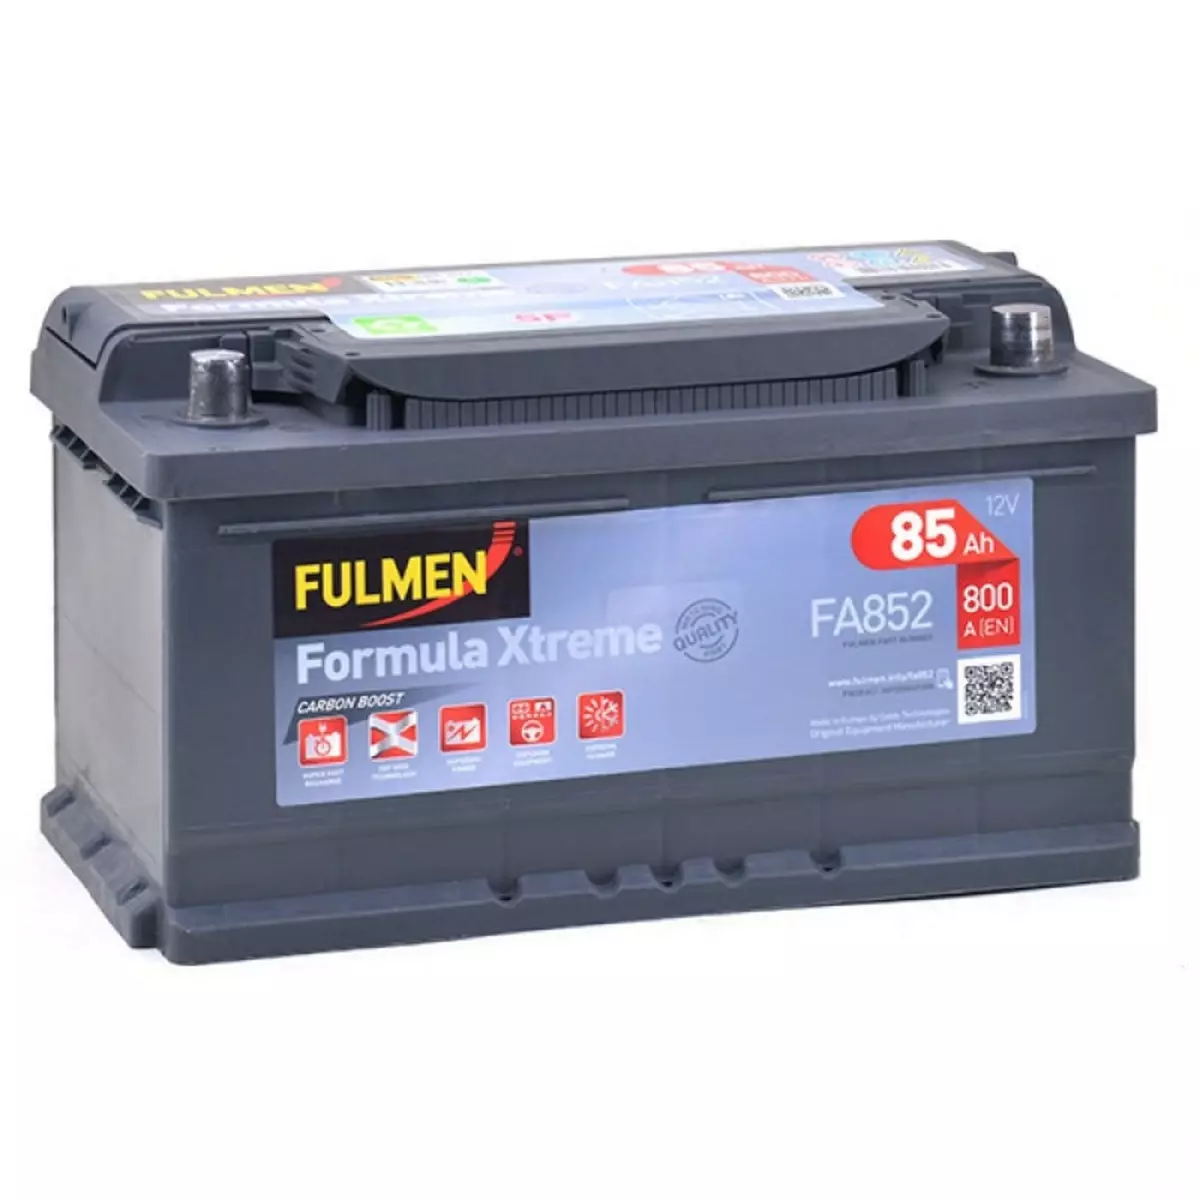 FULMEN Batterie FULMEN Formula XTREME FA852 12v 85AH 800A